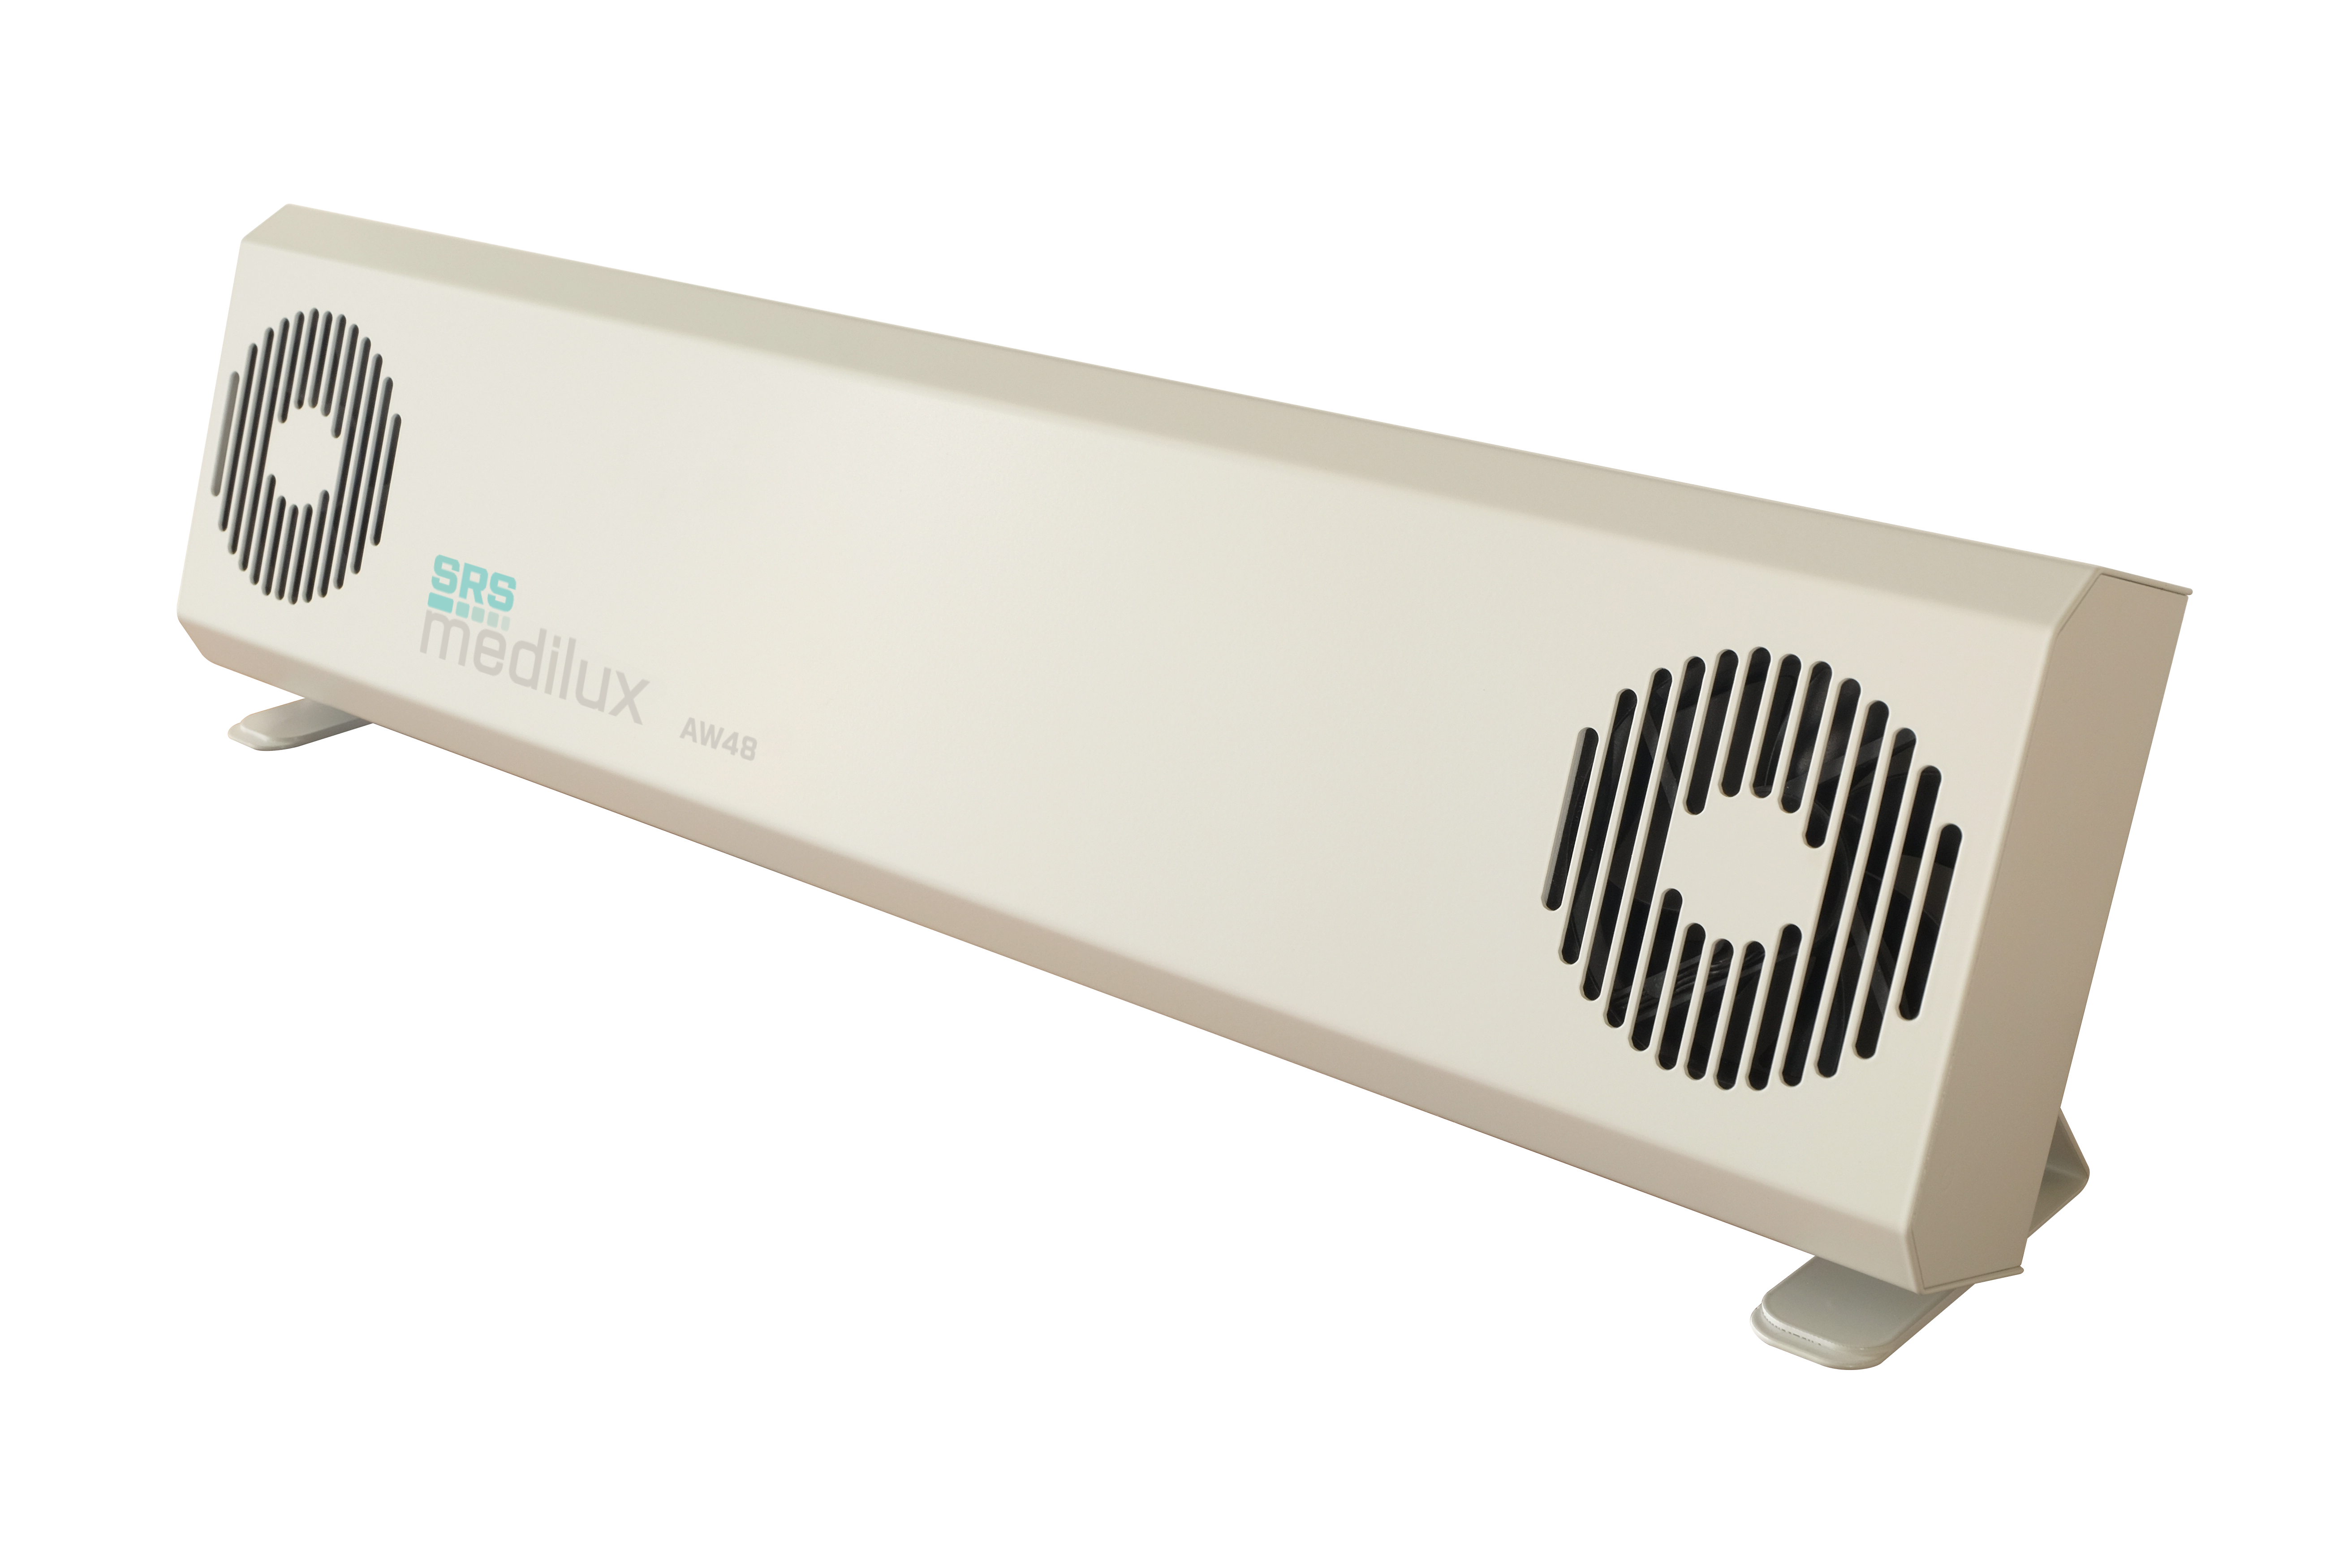 SRSmedilux AW48-X (uzavřený, ventilátorový 48W) WIFI APP, White